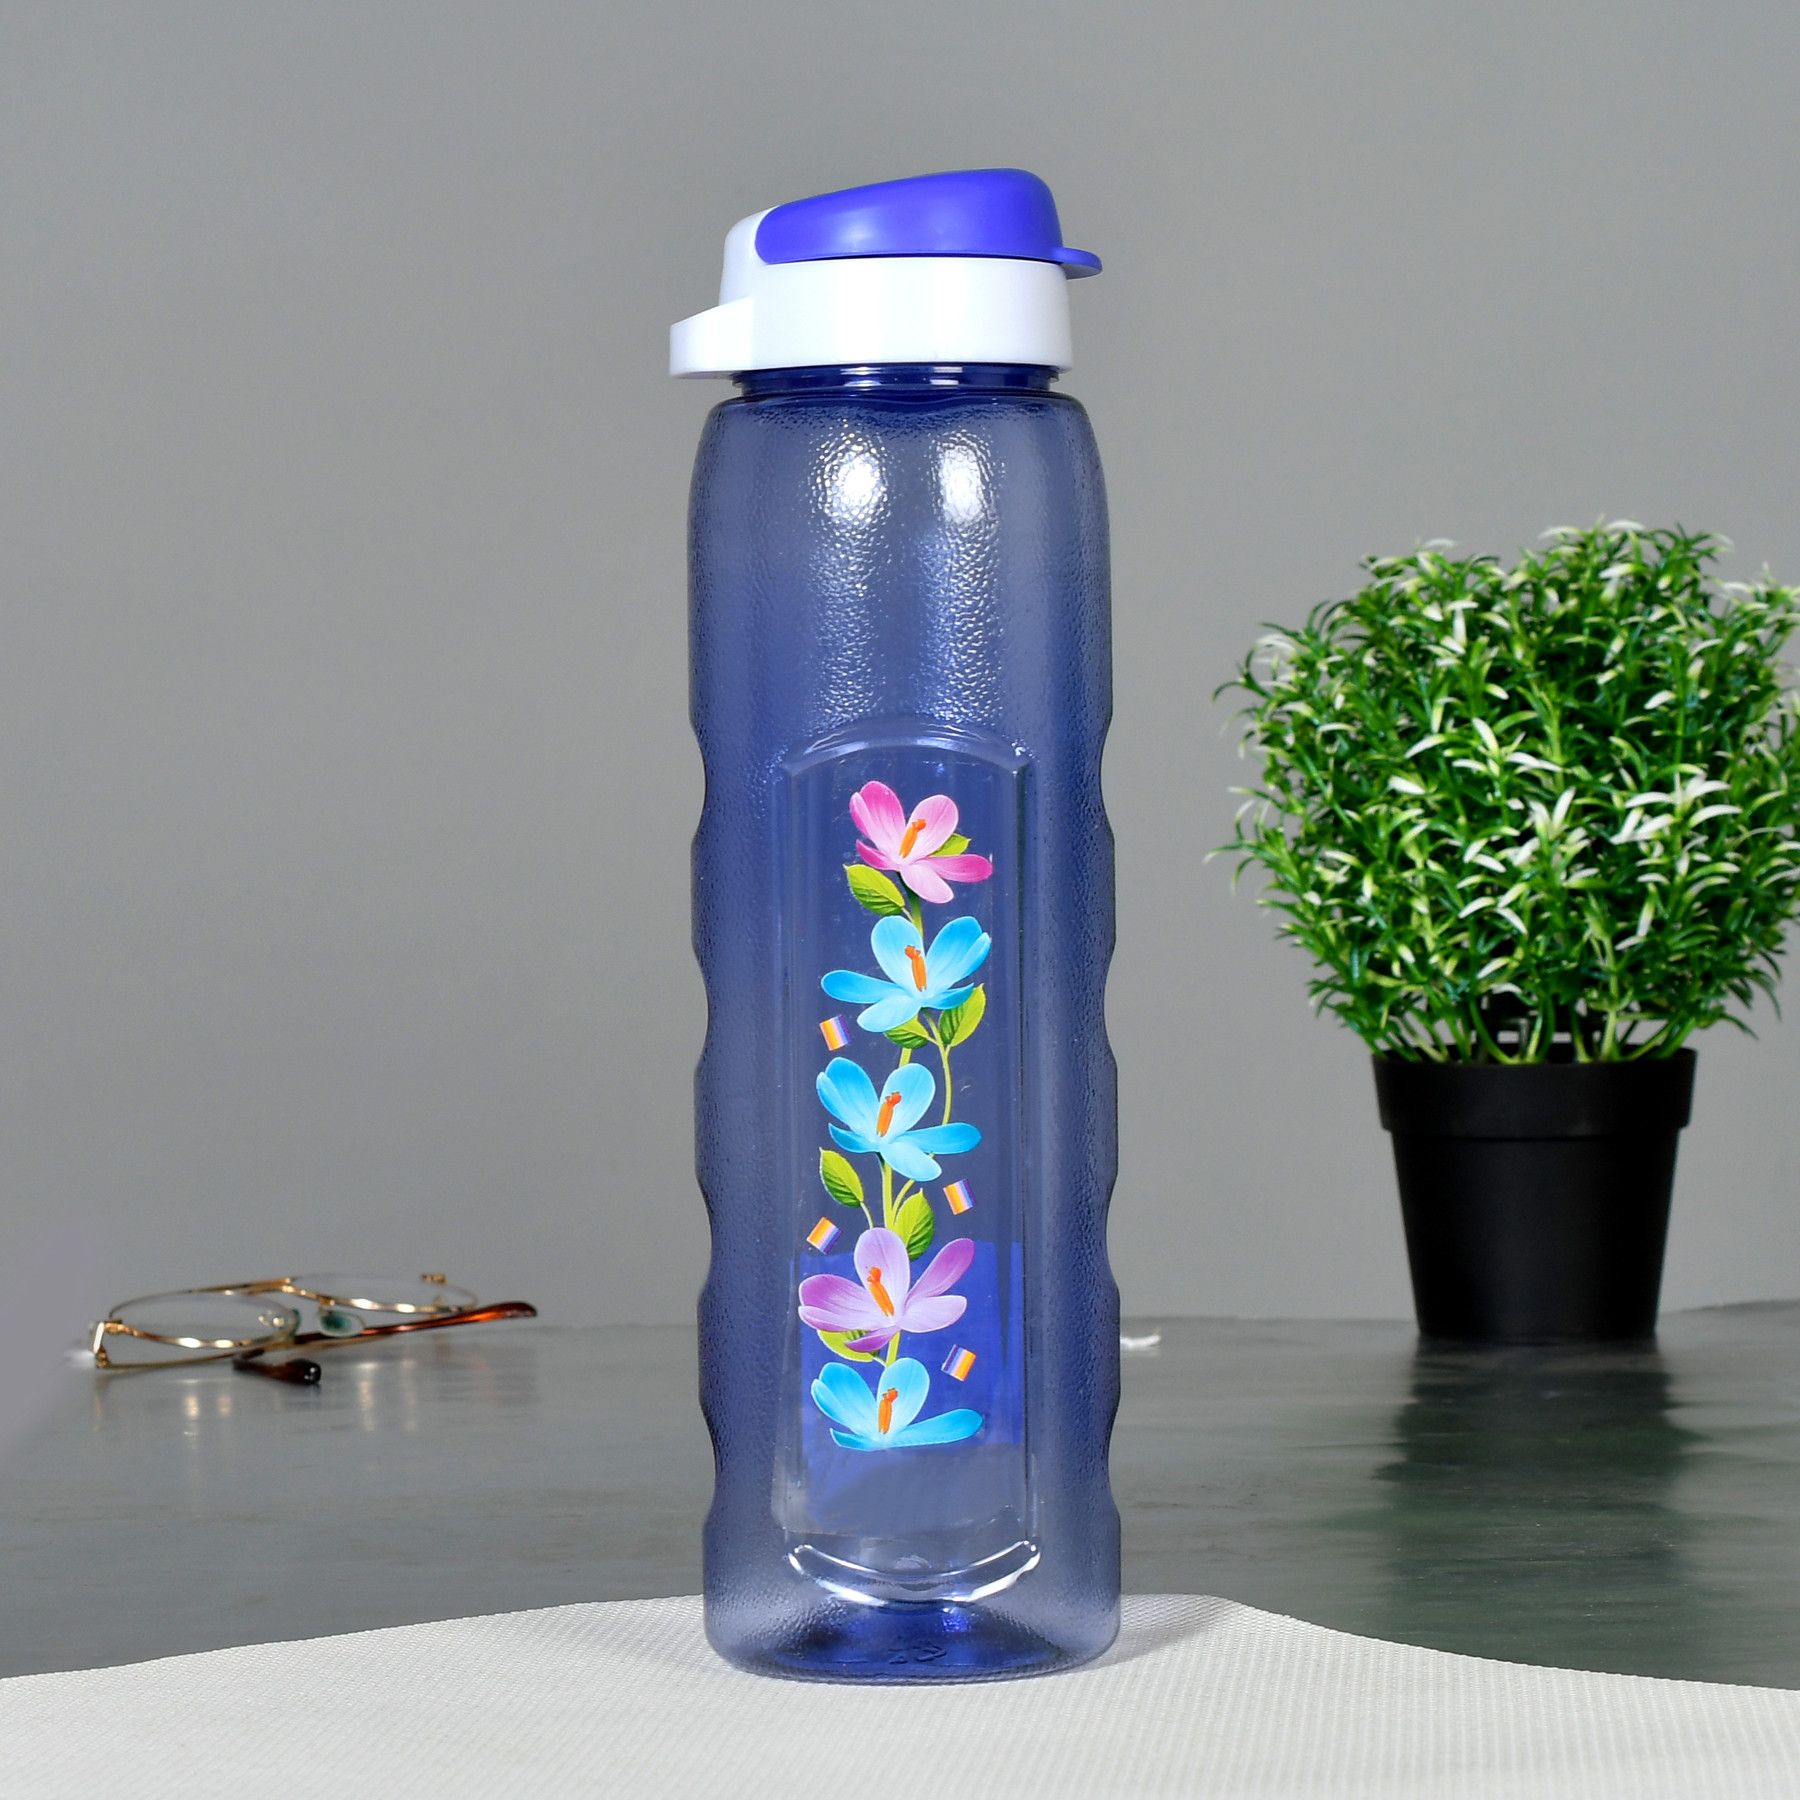 Kuber Industries Unbreakable BPA & Leak Free Plastic Water Bottle With Sipper- 1 Litre, Pack of 3 (Pruple & Sky Blue & Green)